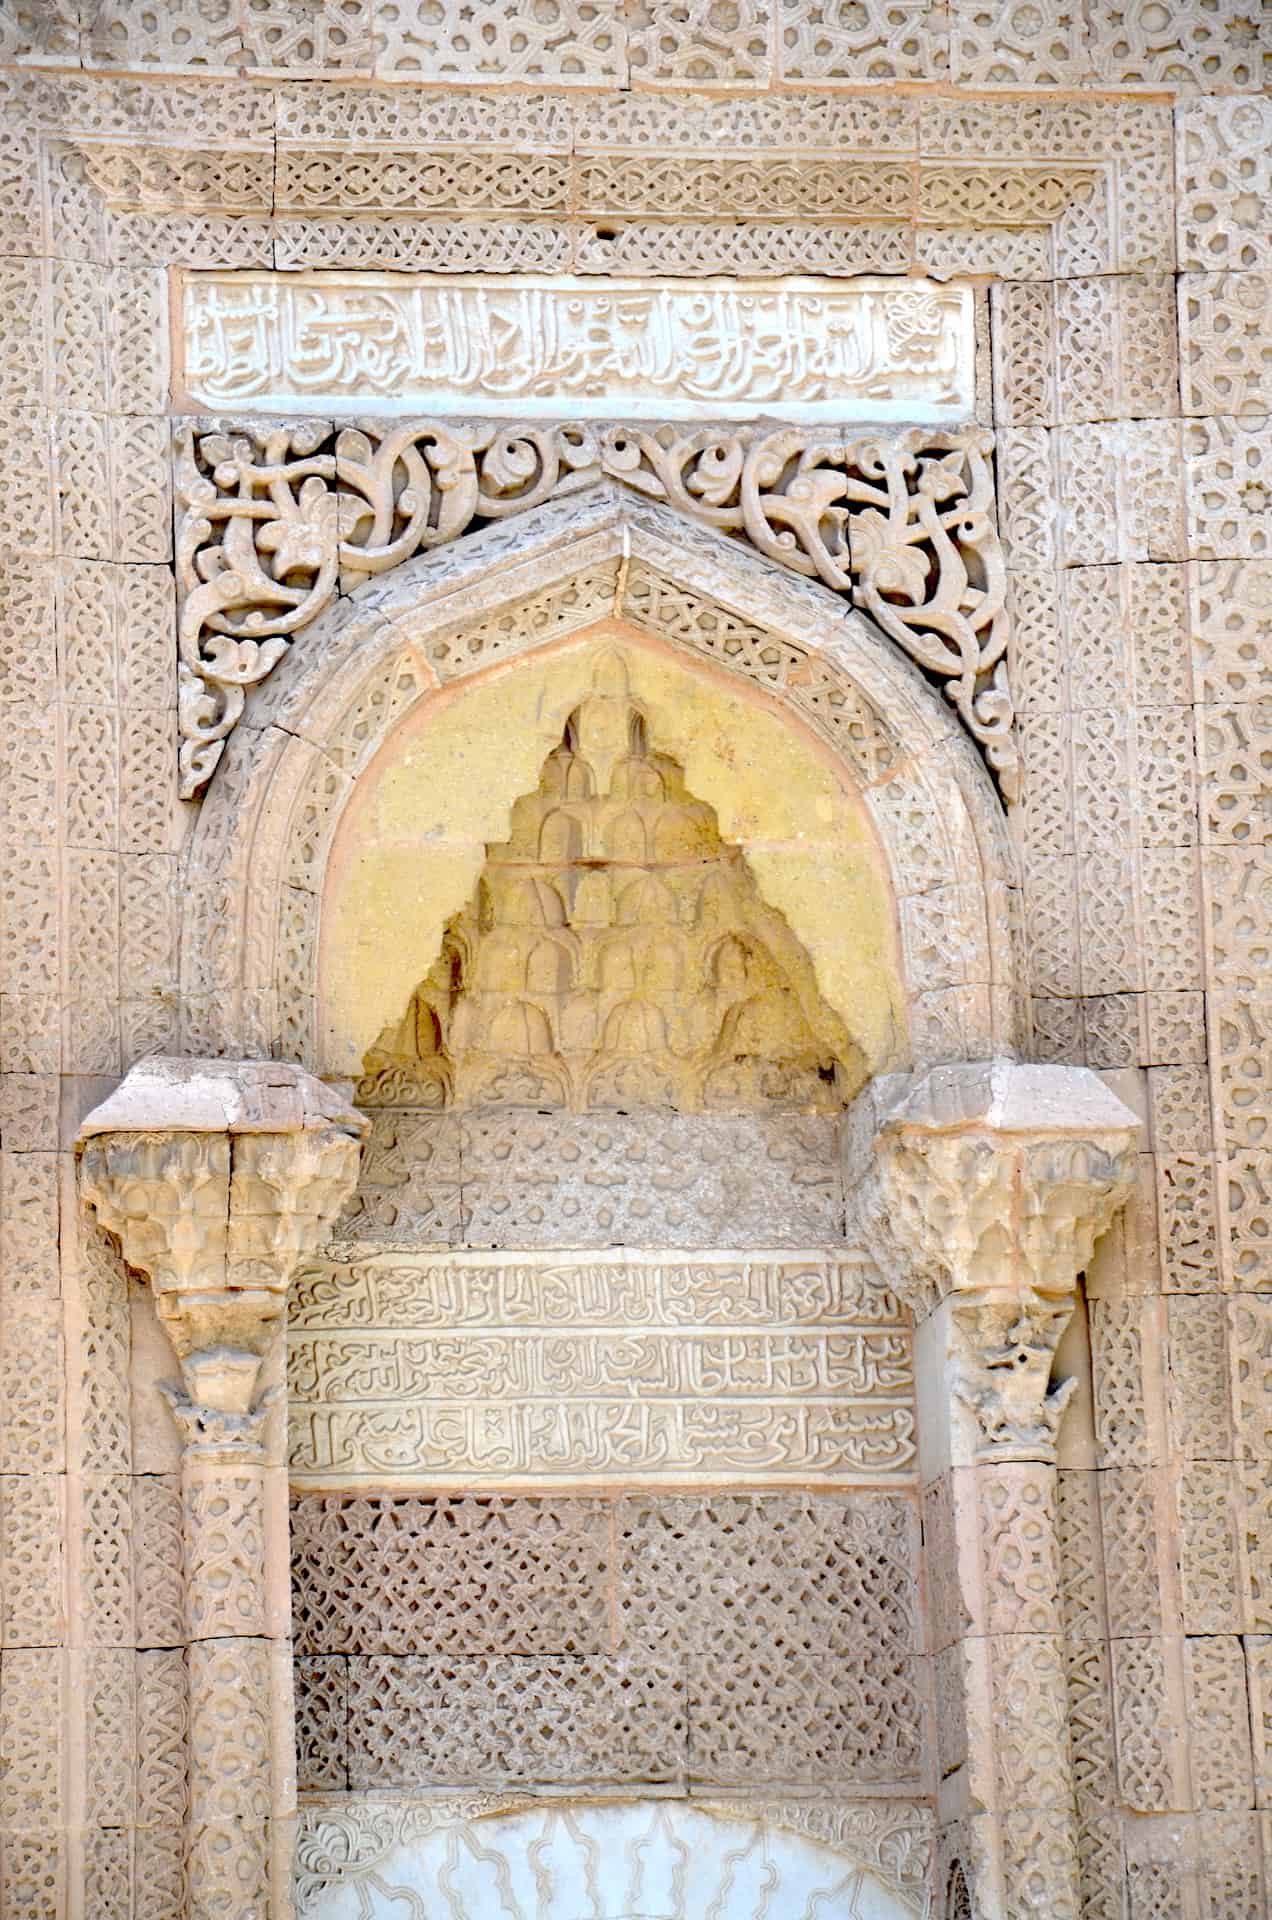 Decorative stonework on the Tomb of Hüdavend Hatun